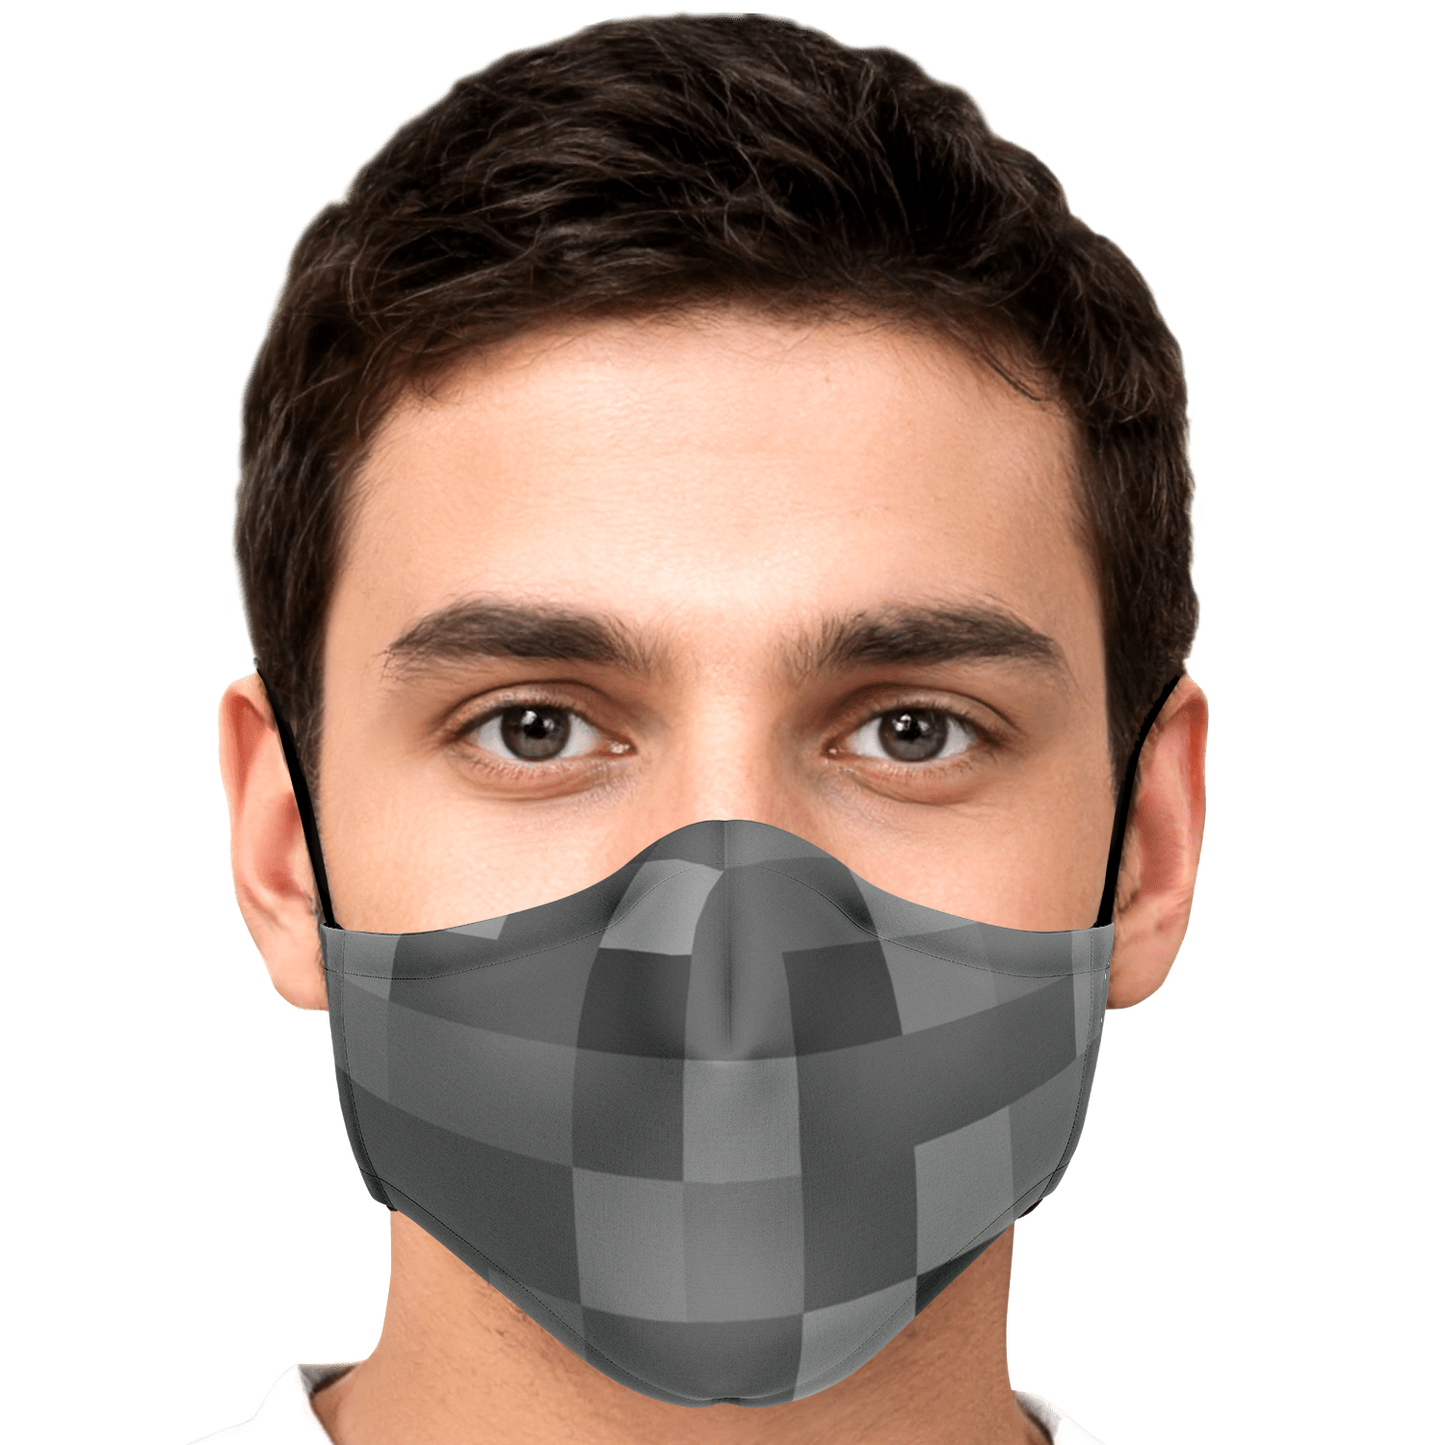 GU 'Pixeled Skeleton' Fashion Mask